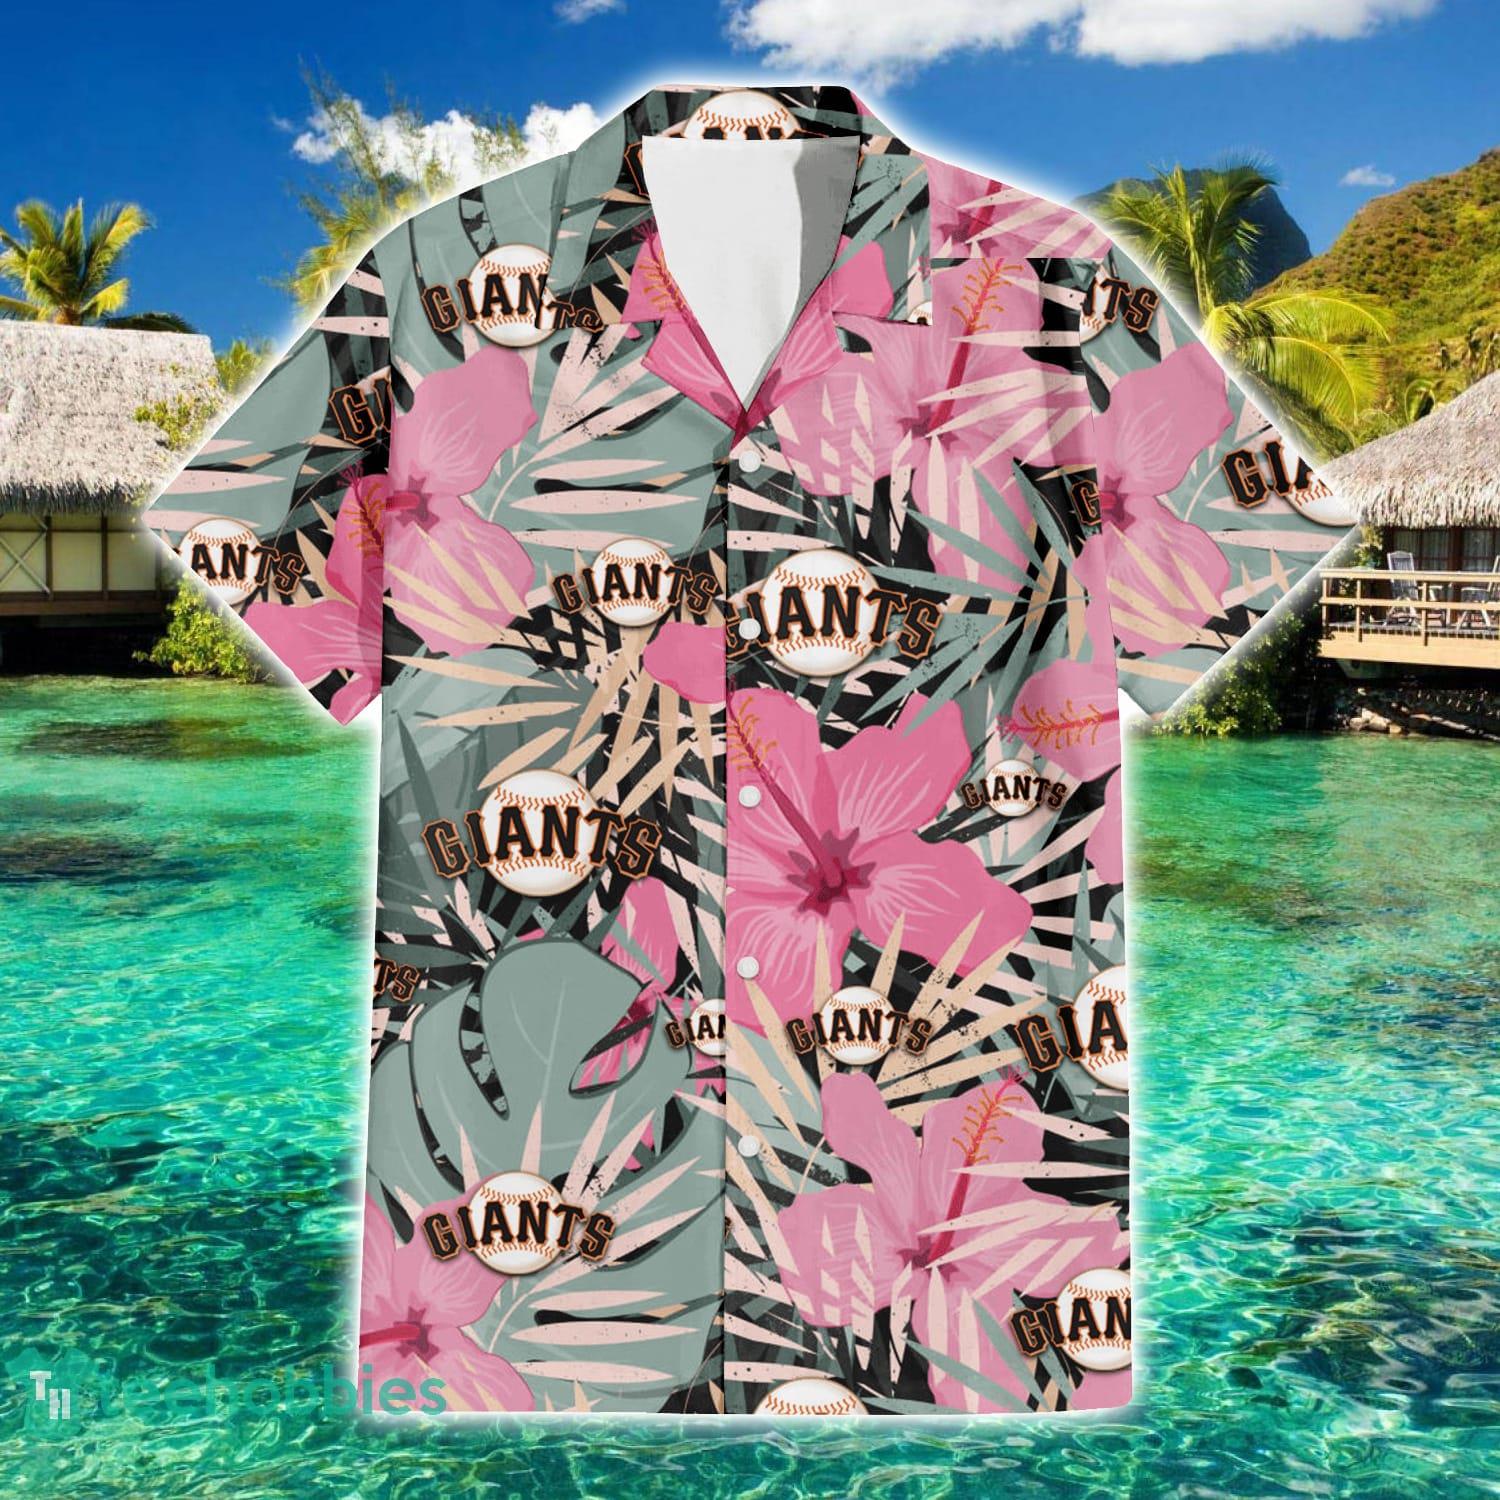 San Francisco Giants Team Hibiscus Pattern Aloha Hawaiian Shirt Summer Gift  - Freedomdesign